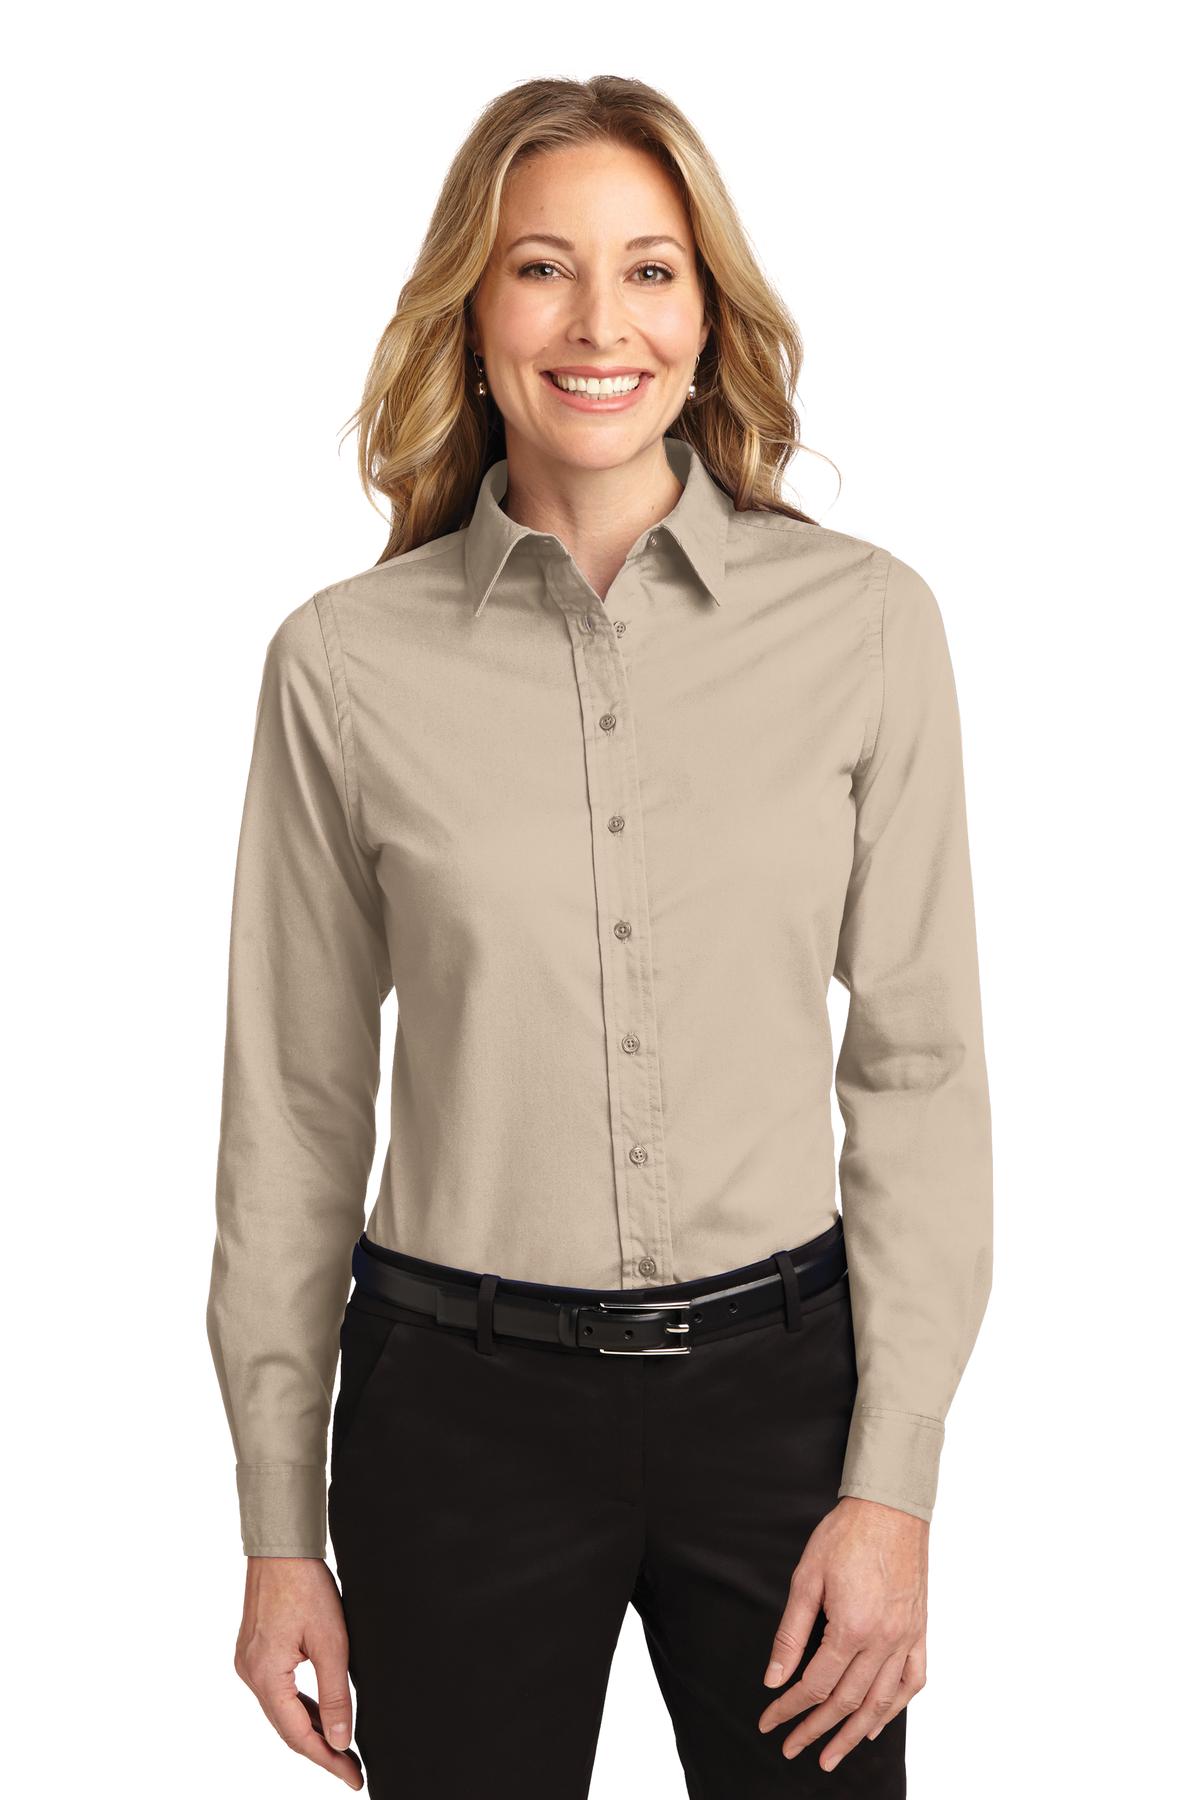 Port Authority Ladies Long Sleeve Easy Care Shirt-M (Stone) - image 1 of 6